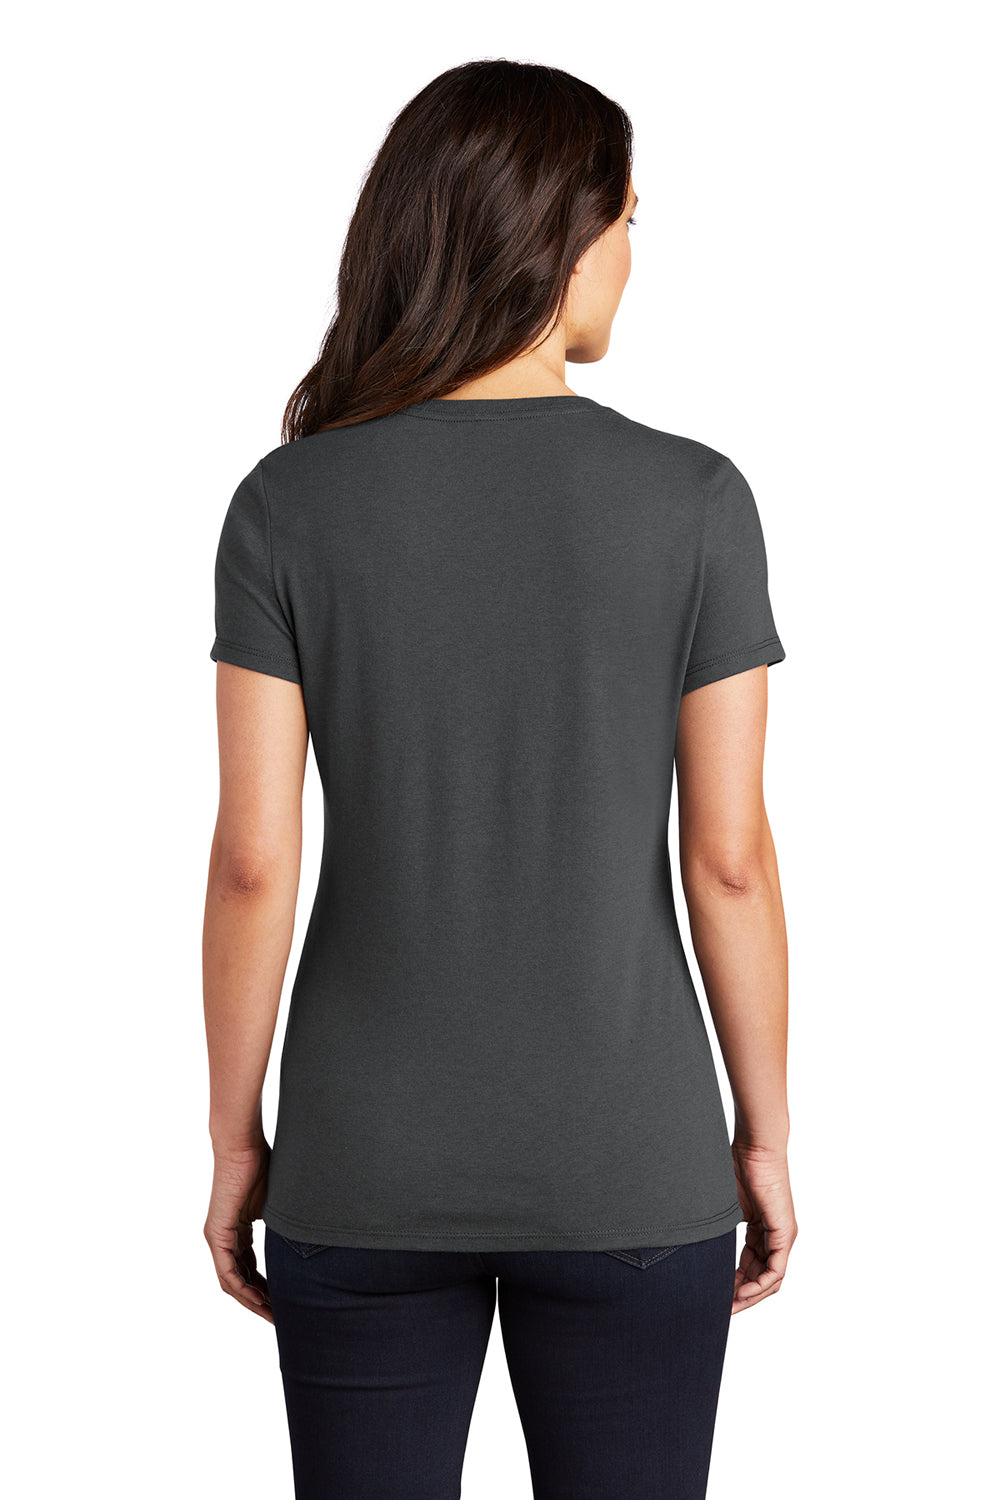 District DM130L Womens Perfect Tri Short Sleeve Crewneck T-Shirt Charcoal Grey Back